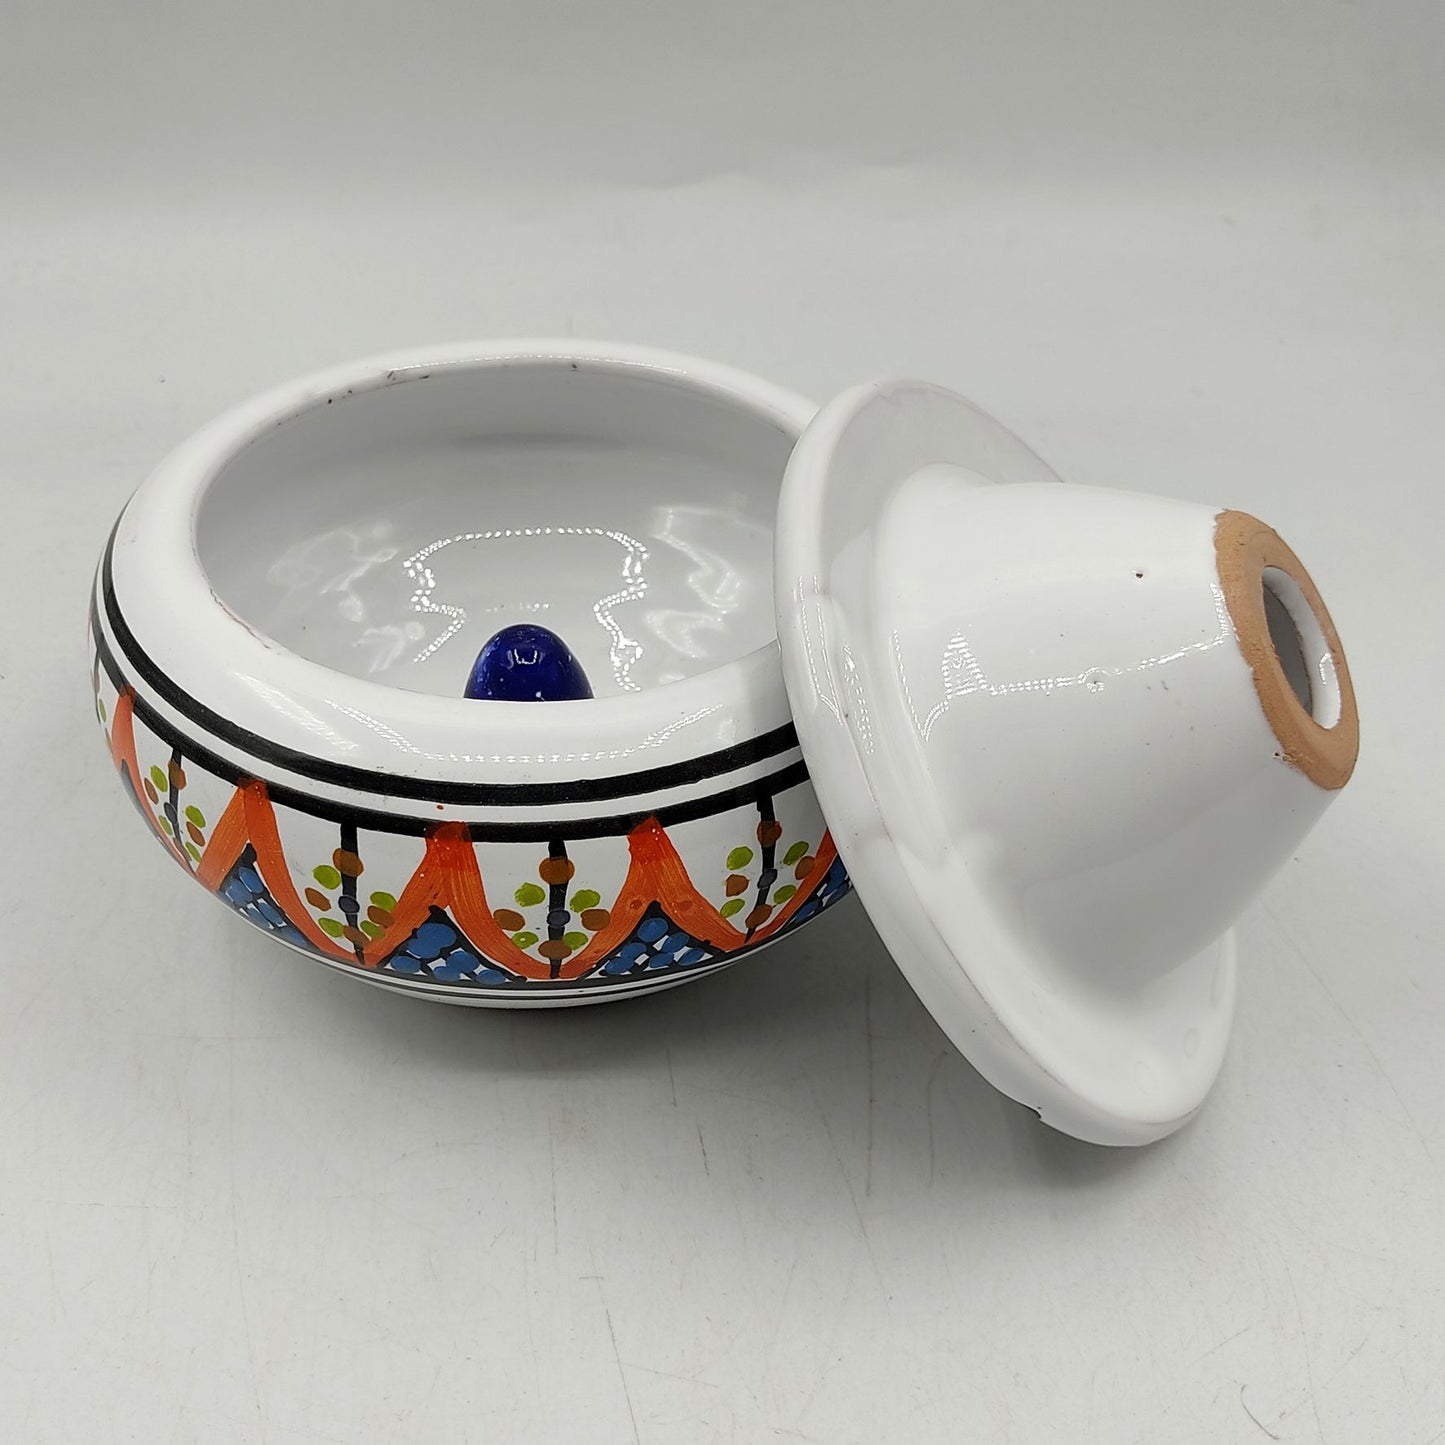 Etnico Arredo Posacenere Ceramica Antiodore Tunisina Marocchina 2007211103